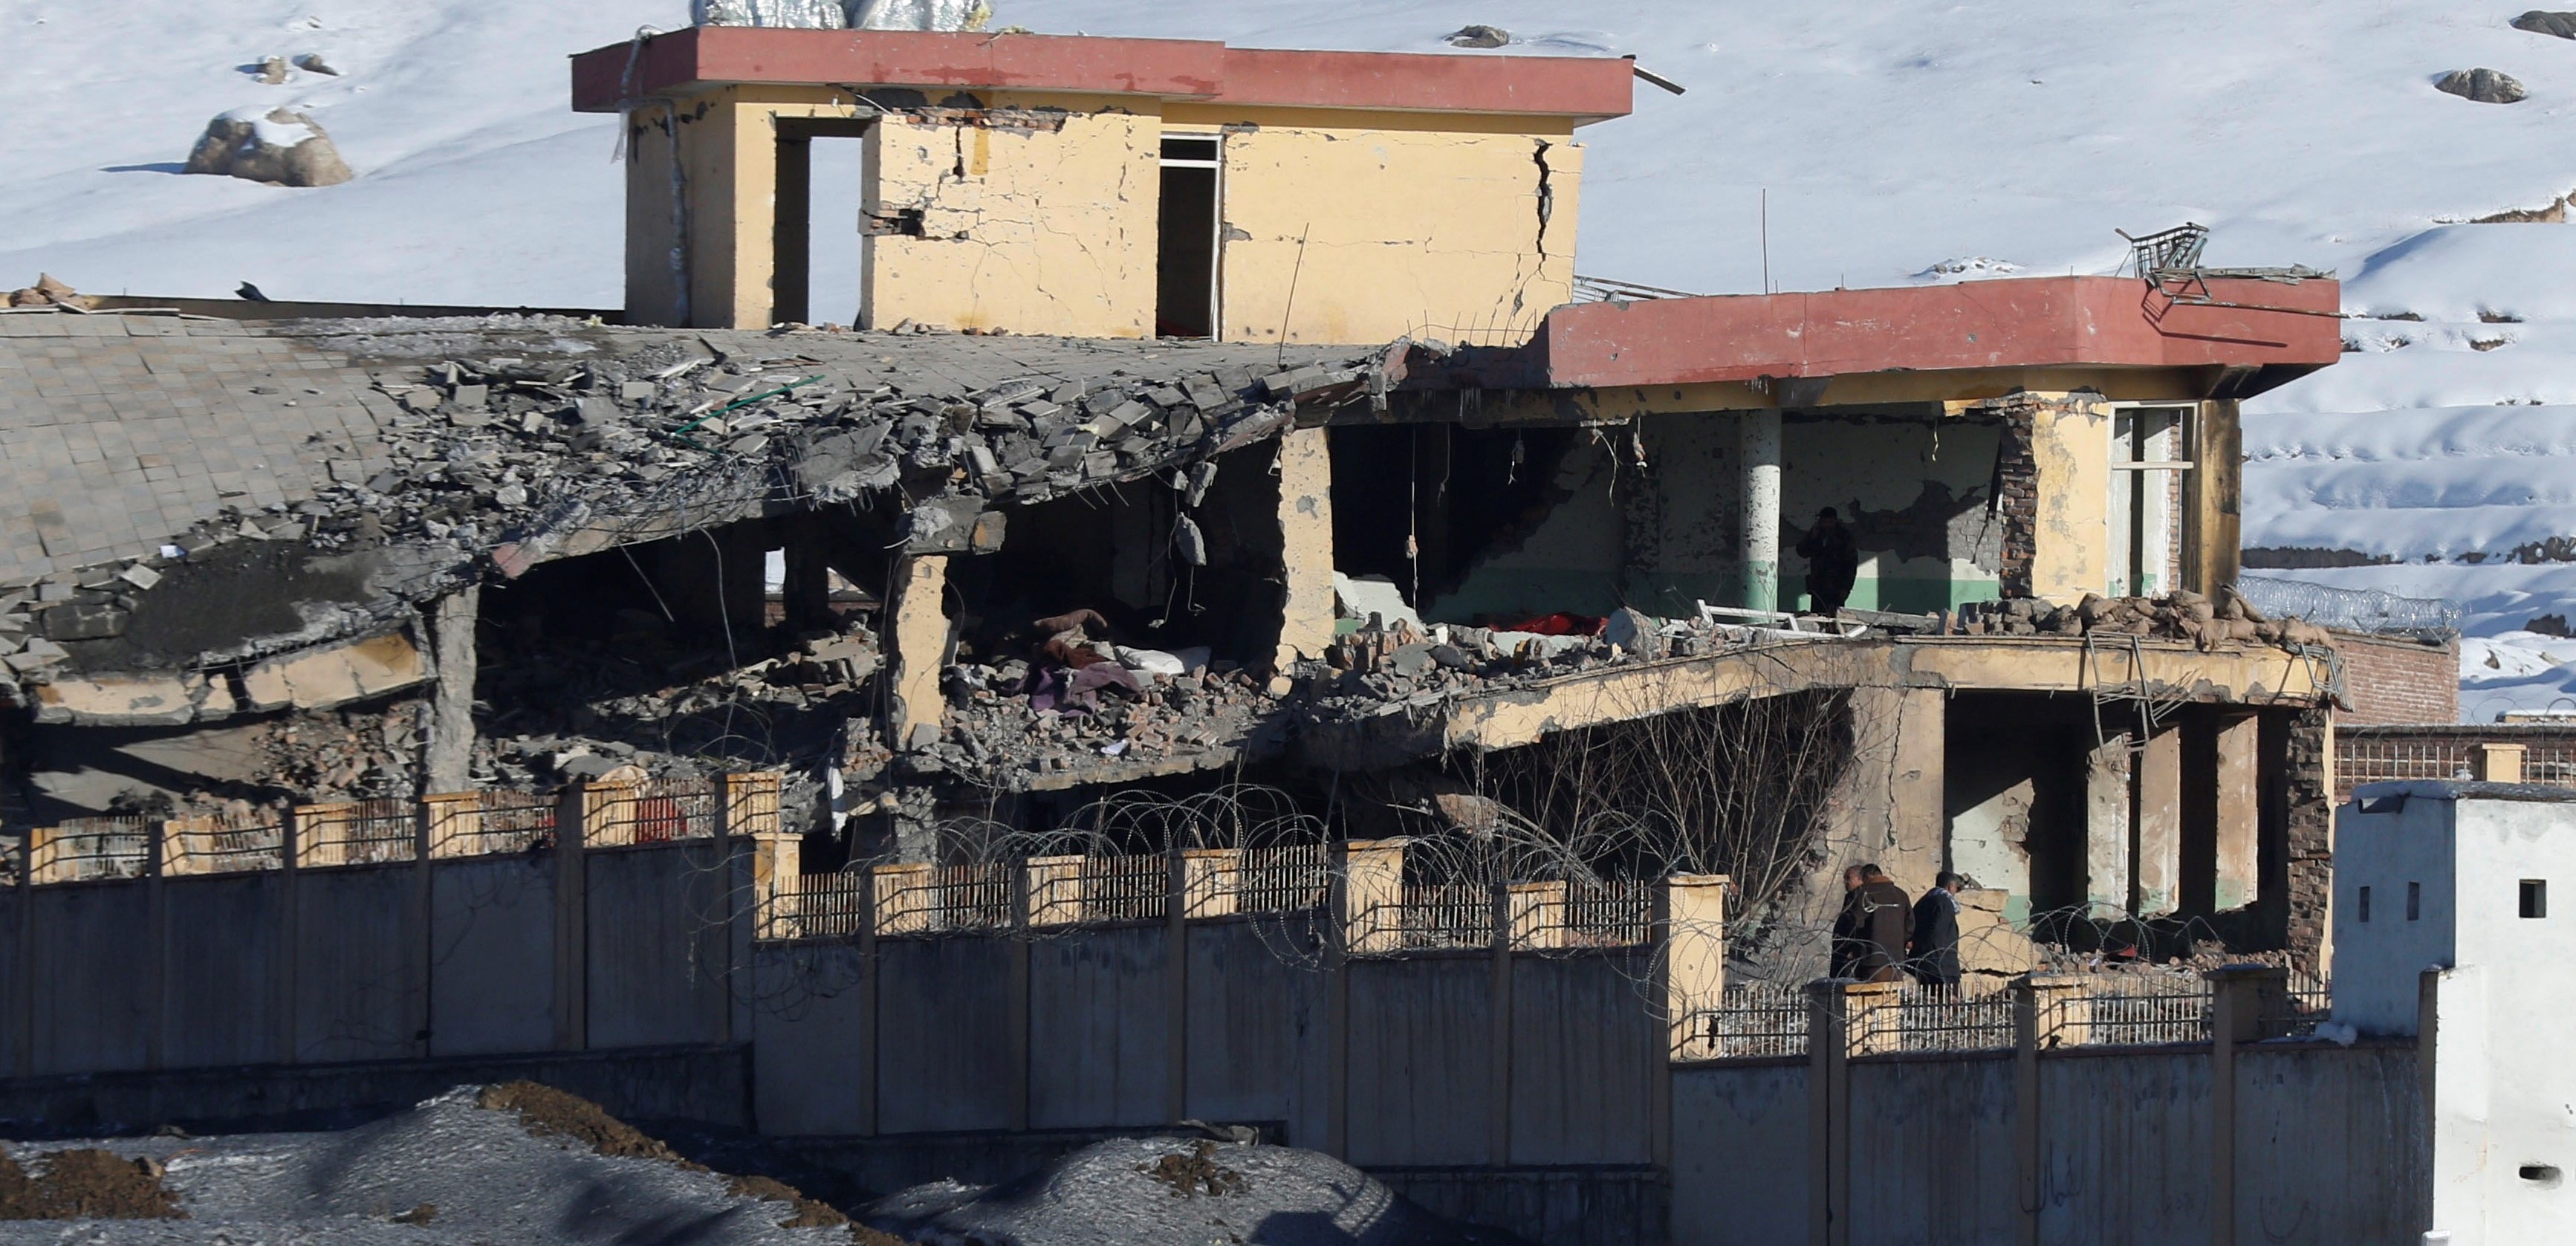 Taliban car bomb kills at least 8 Afghan security force members in Ghazni province